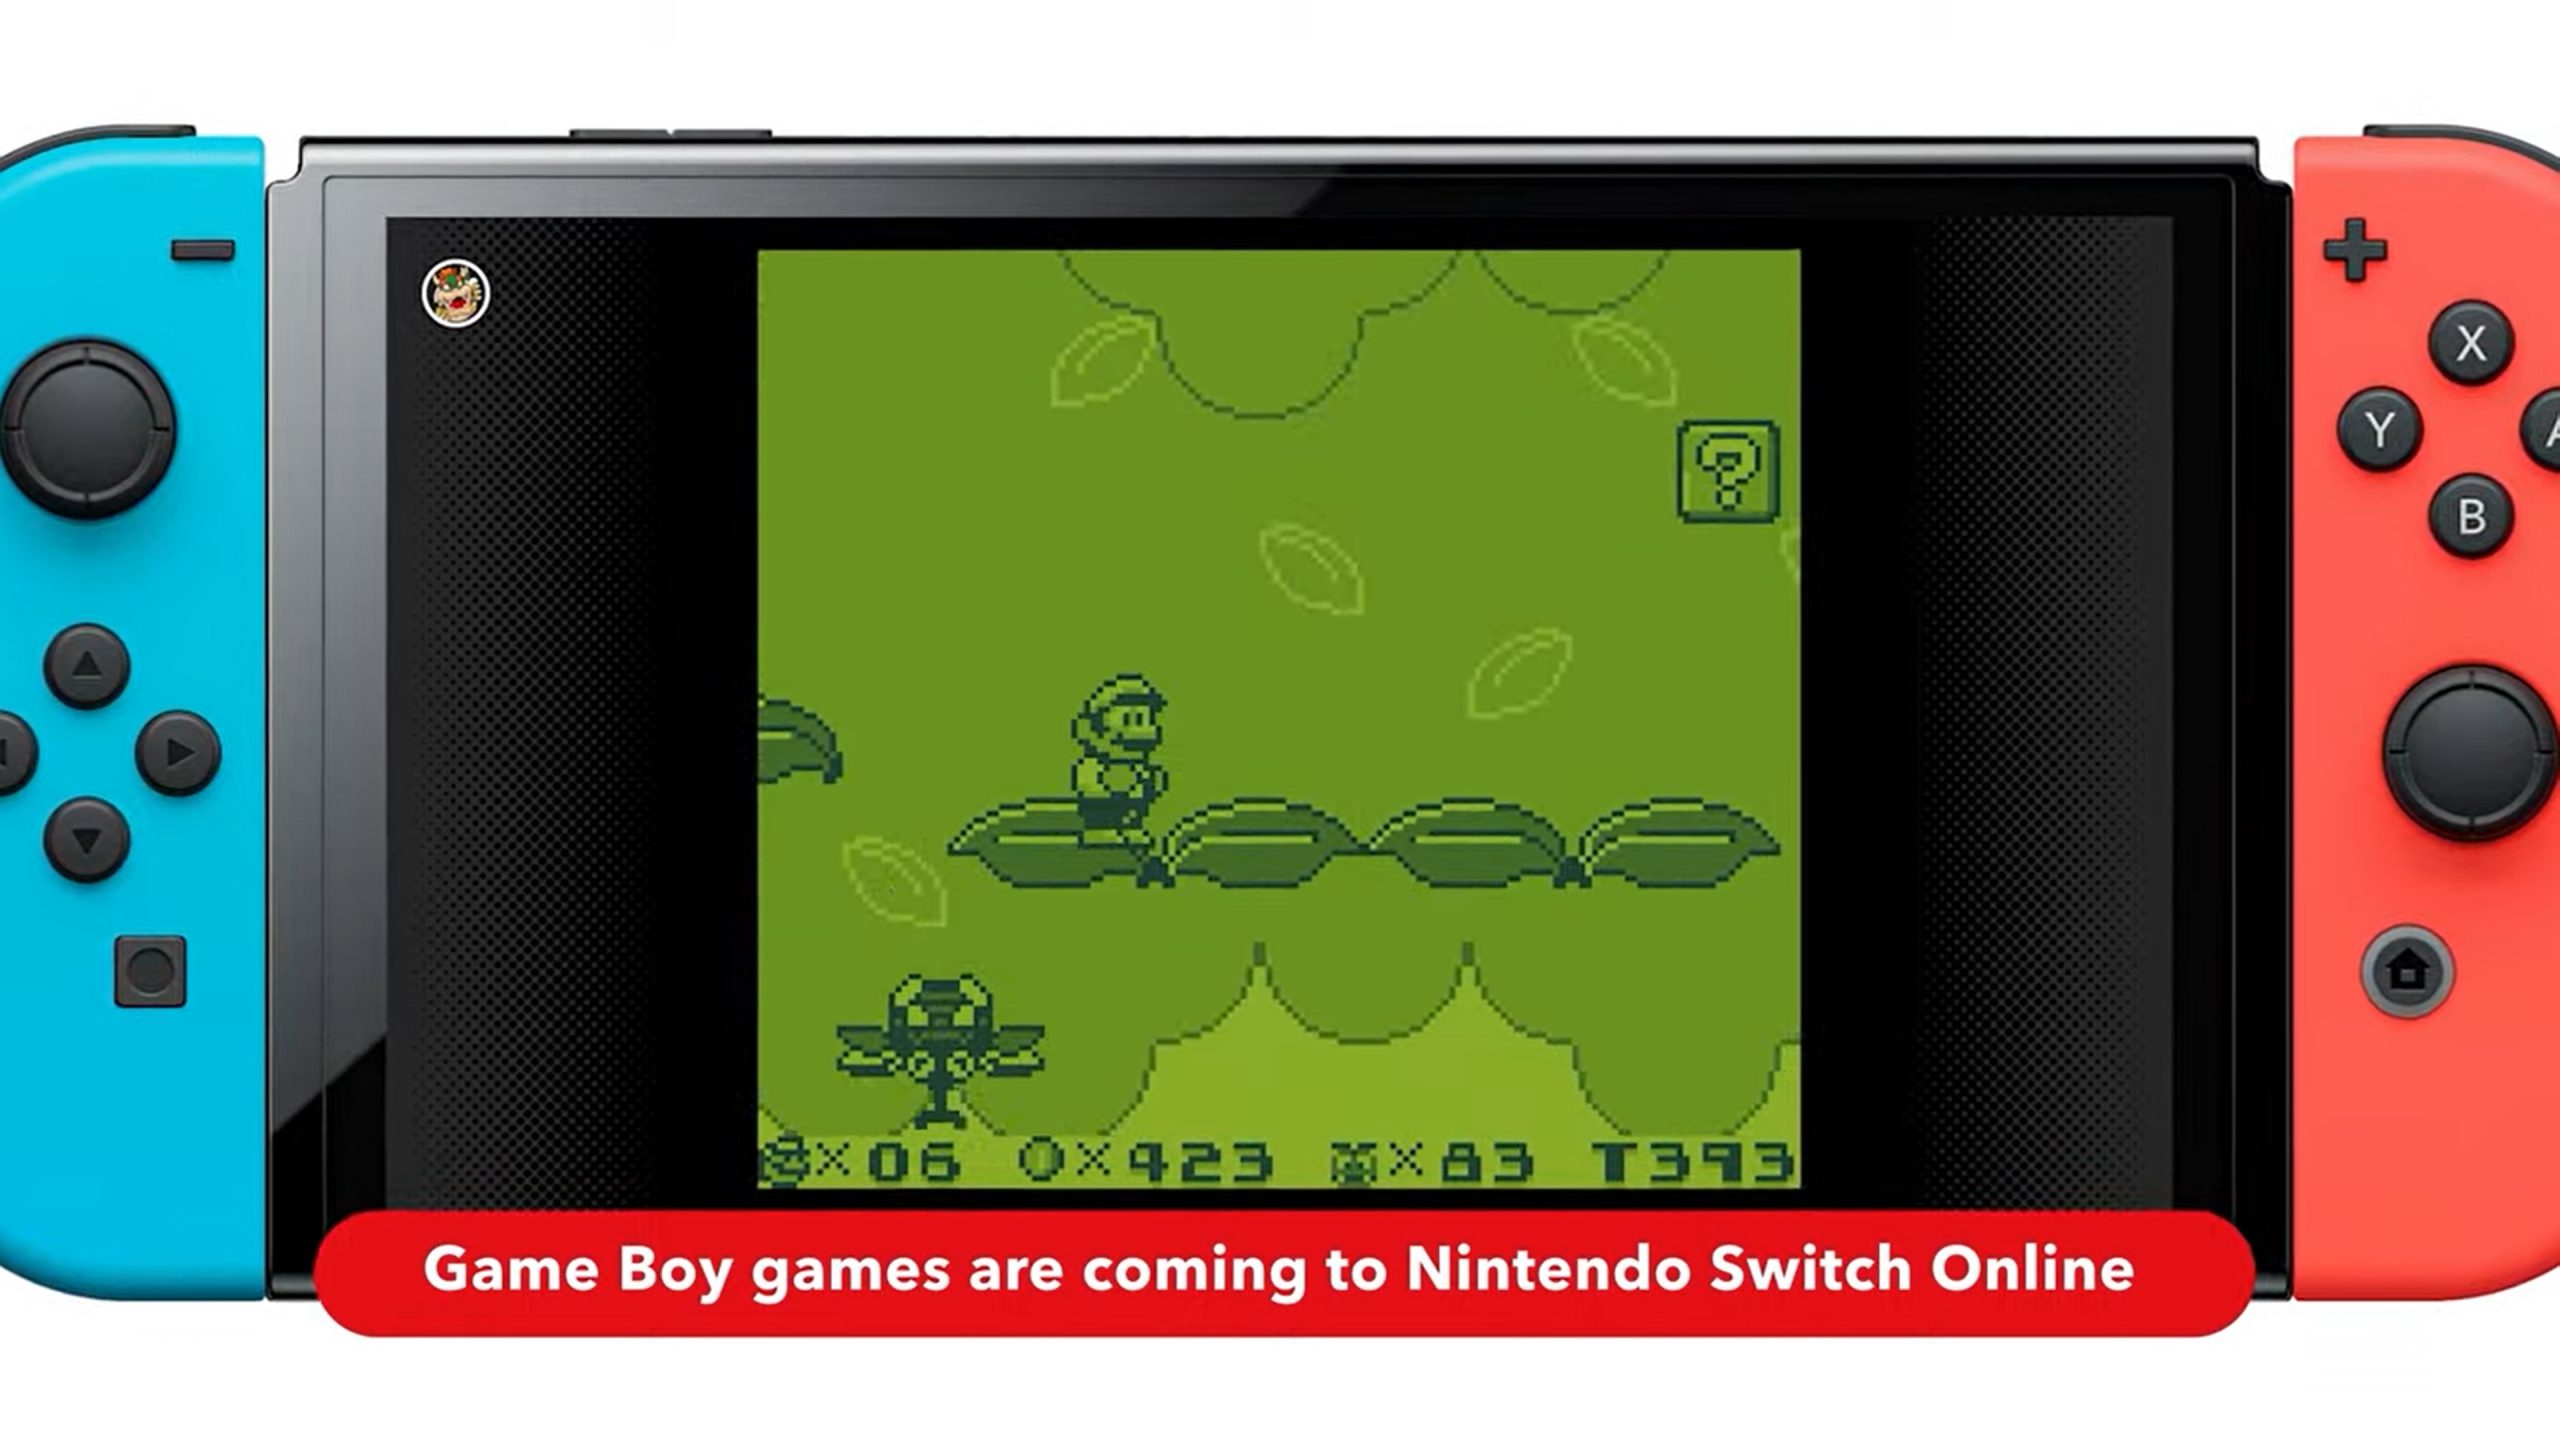 Nintendo Switch Online announces Game Boy games